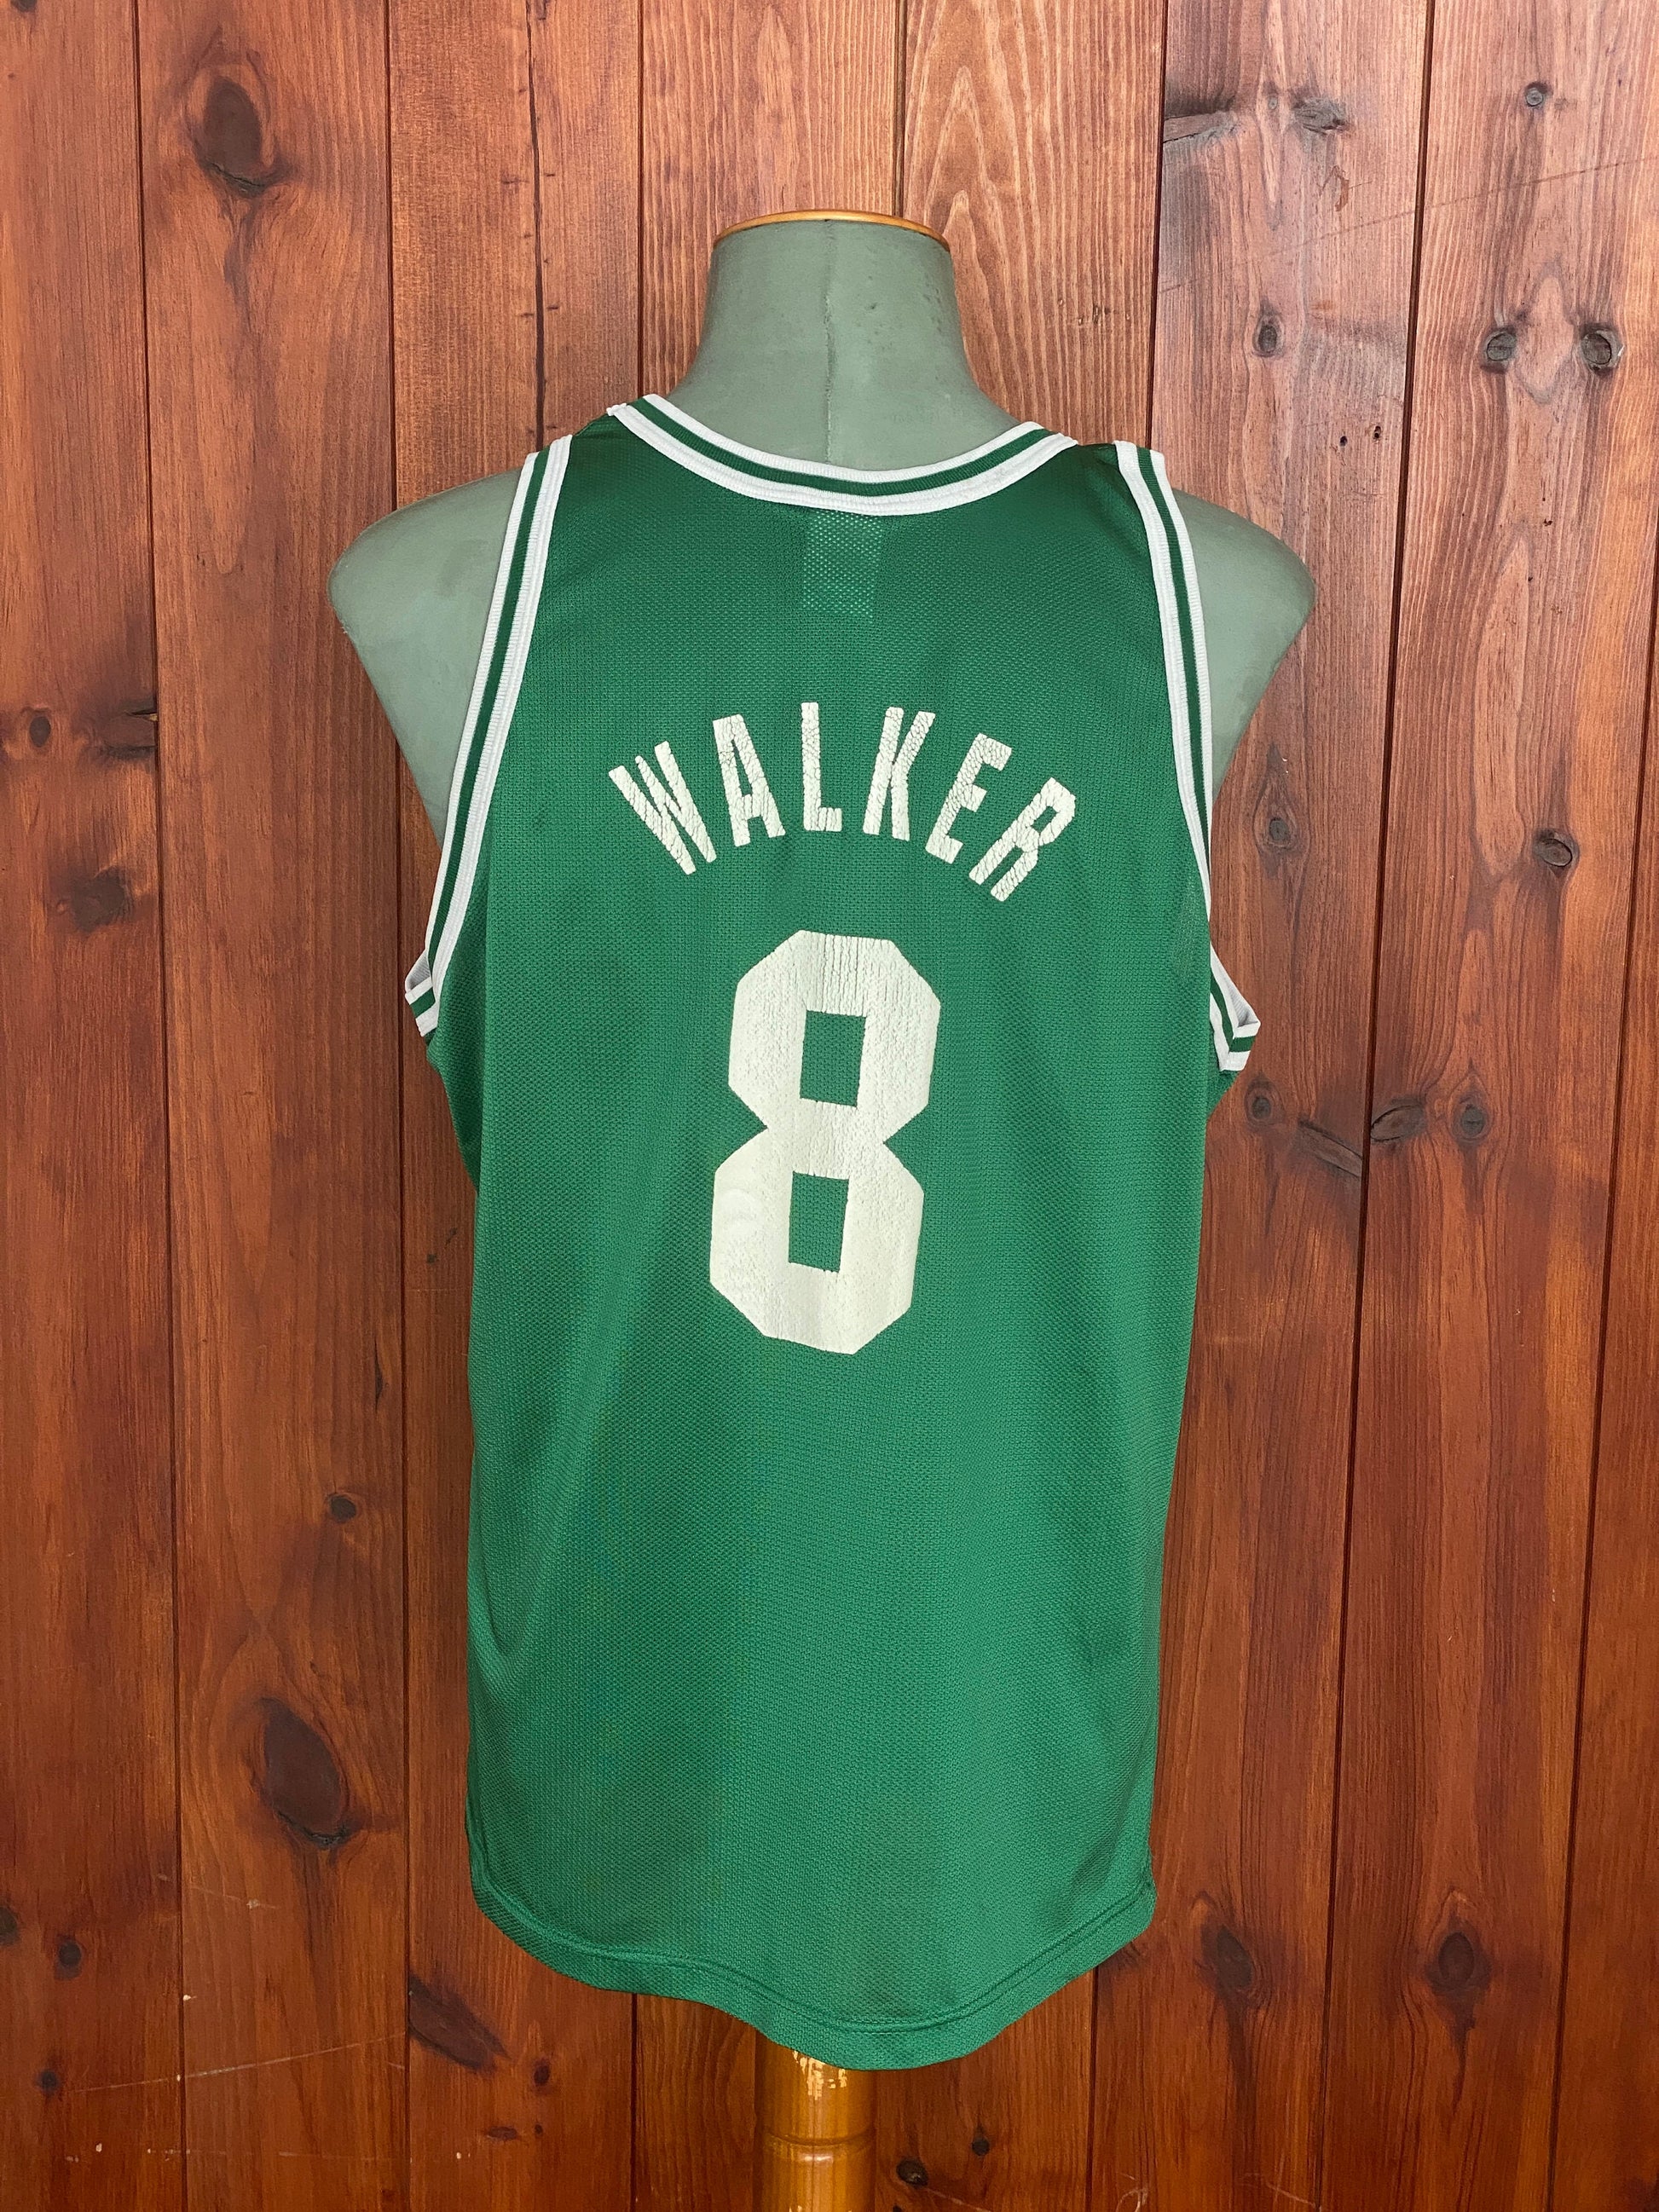 Vintage 90s NBA Celtics #8 Walker Jersey - Size 48 | Made by Champion